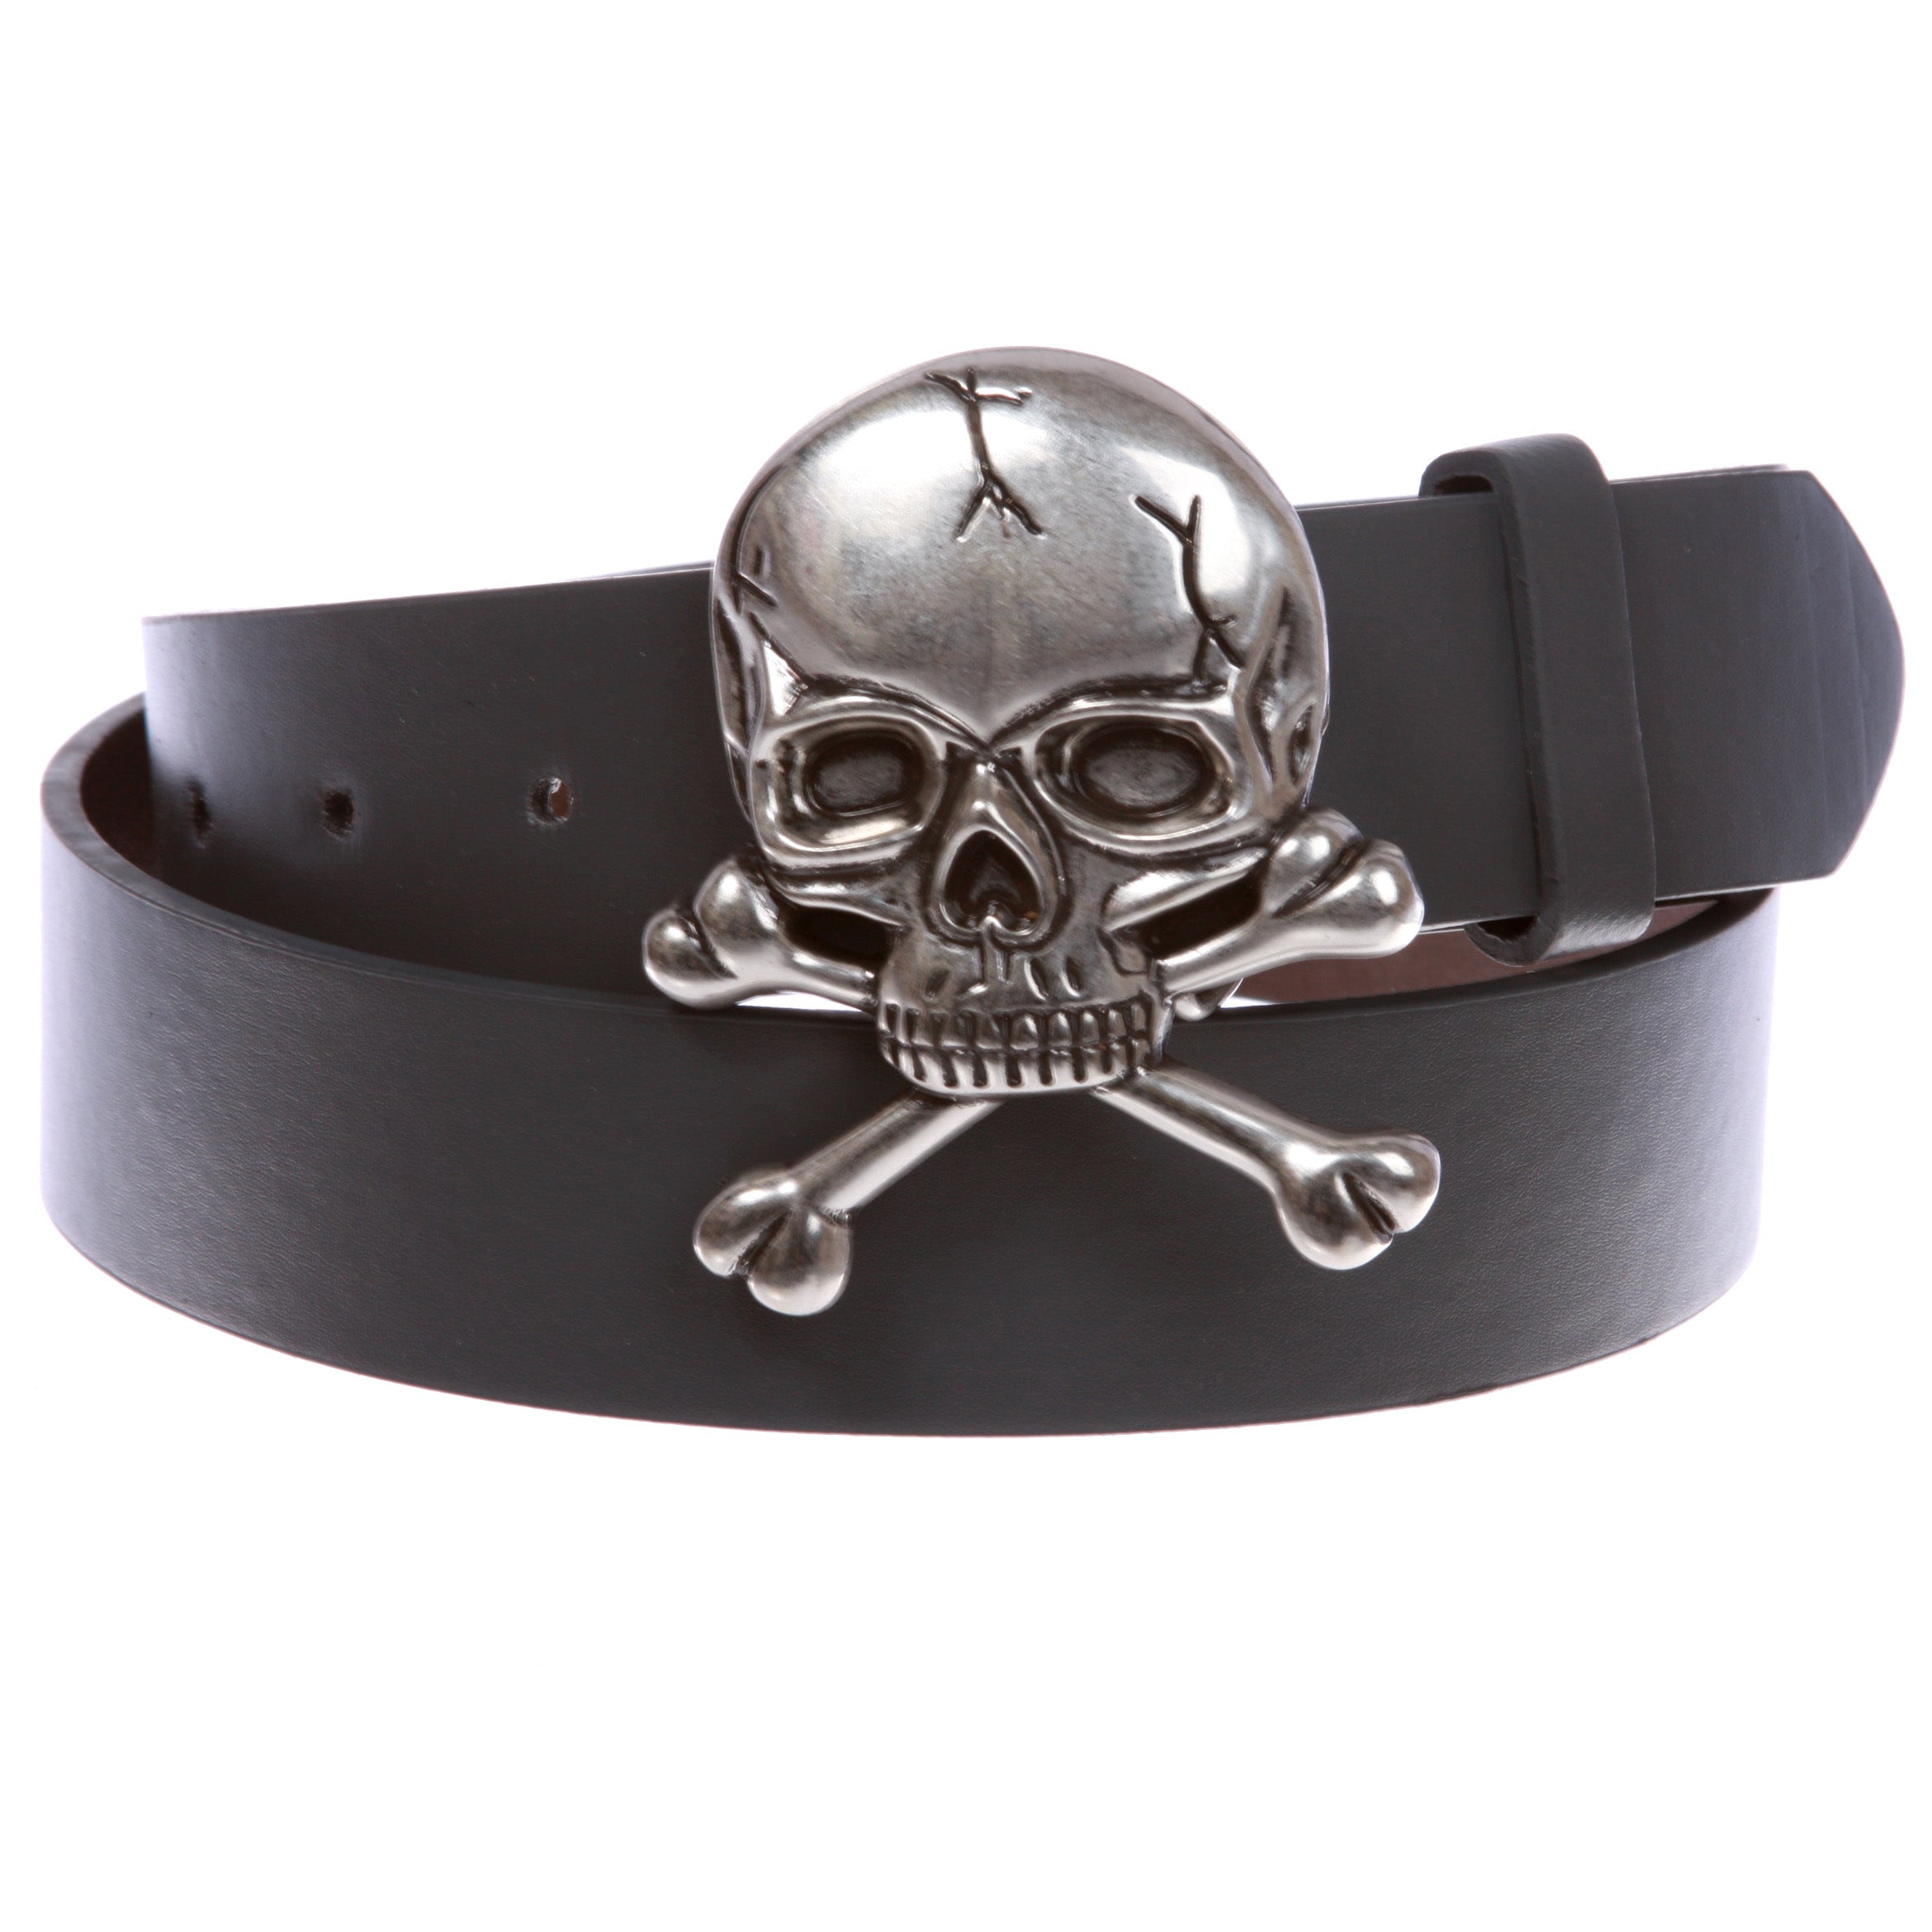 Skull and Cross Bone Pirate Halloween Costume Belt Multi-Color Options